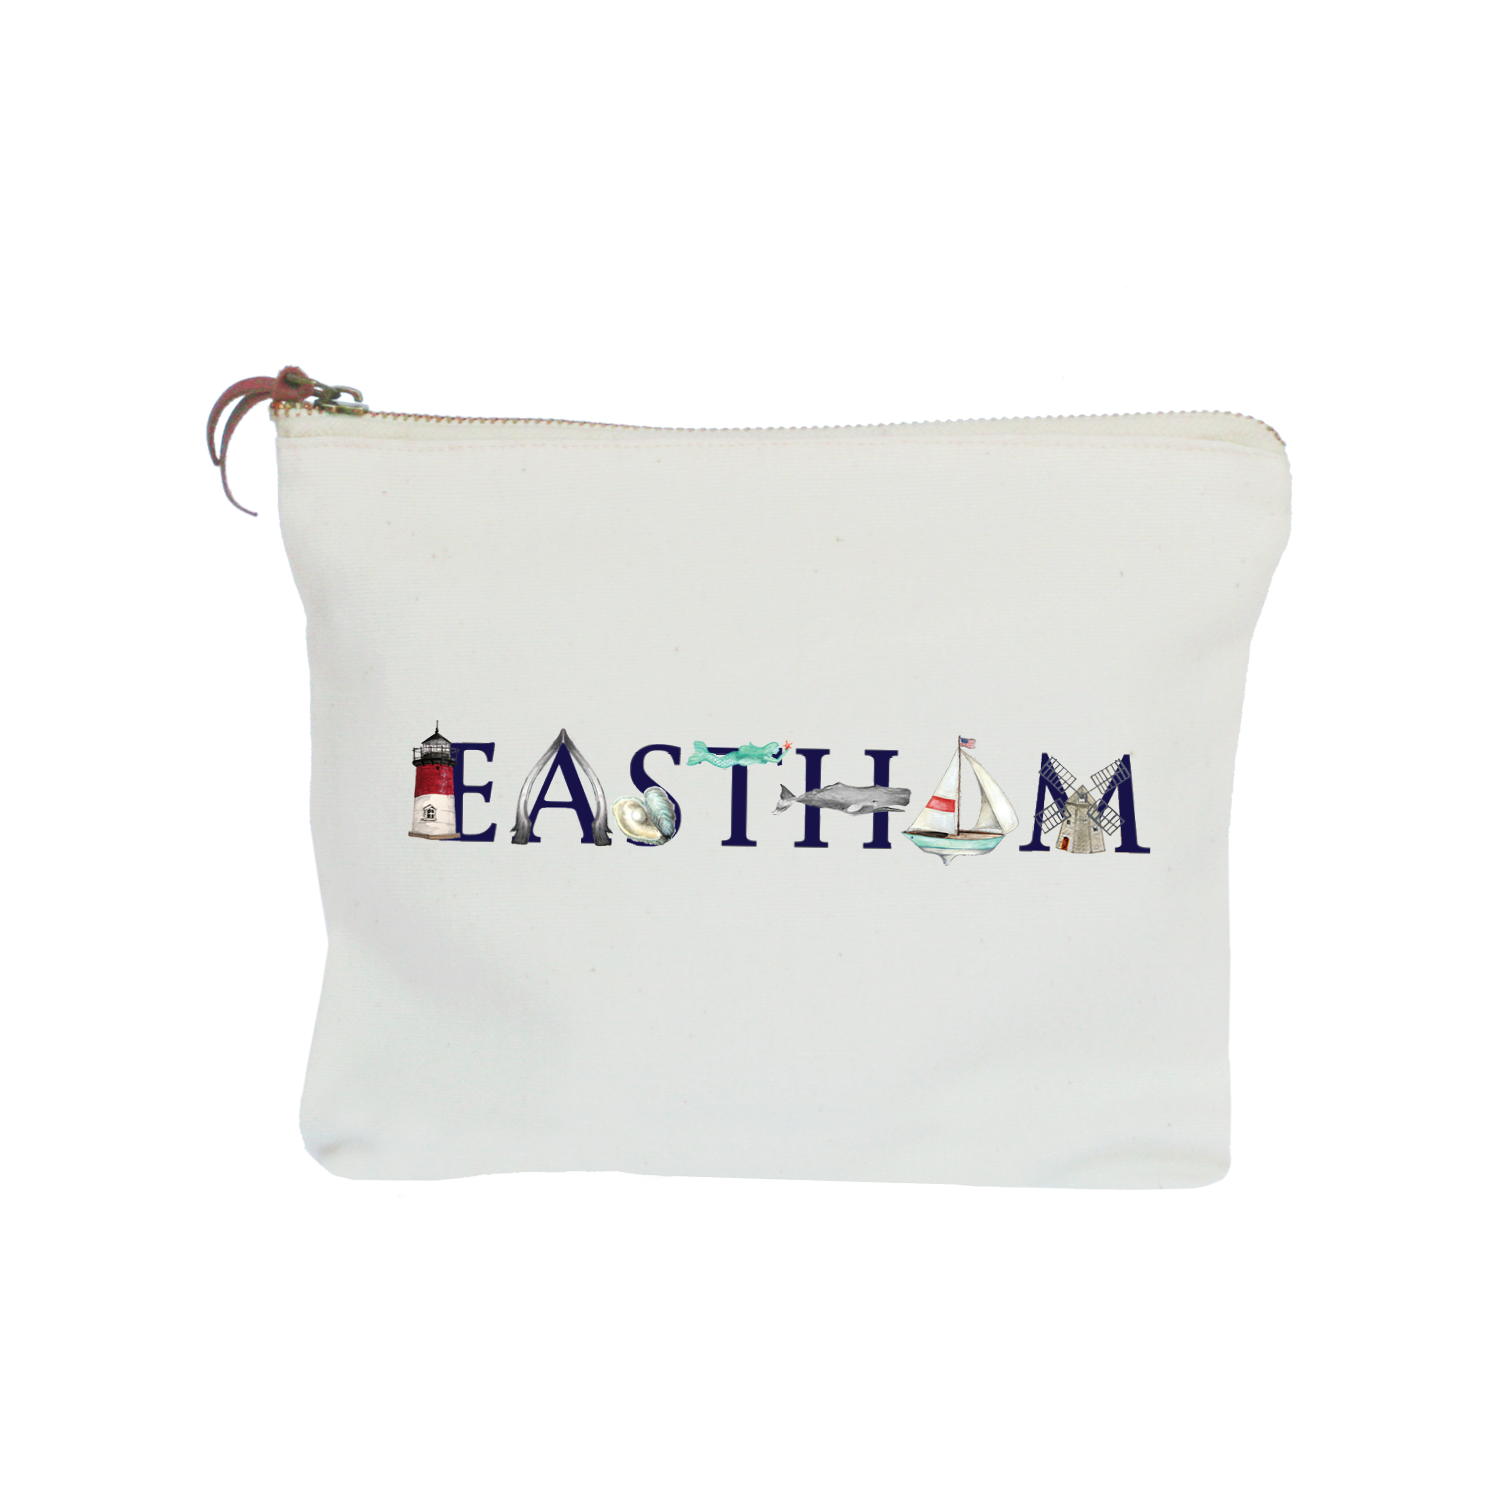 eastham zipper pouch